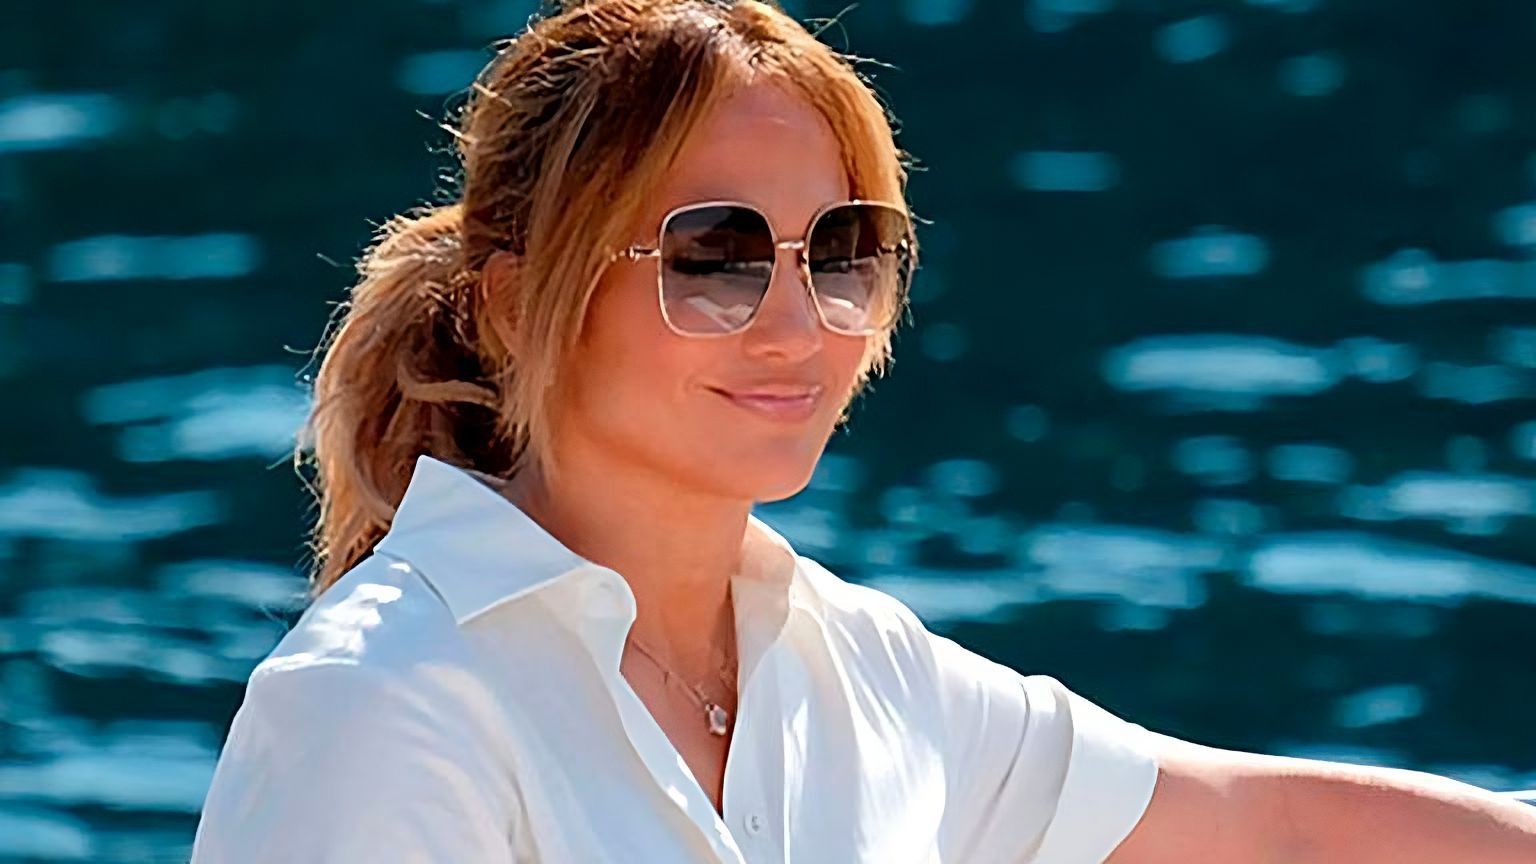 Jennifer Lopez's Favorite Sunglasses